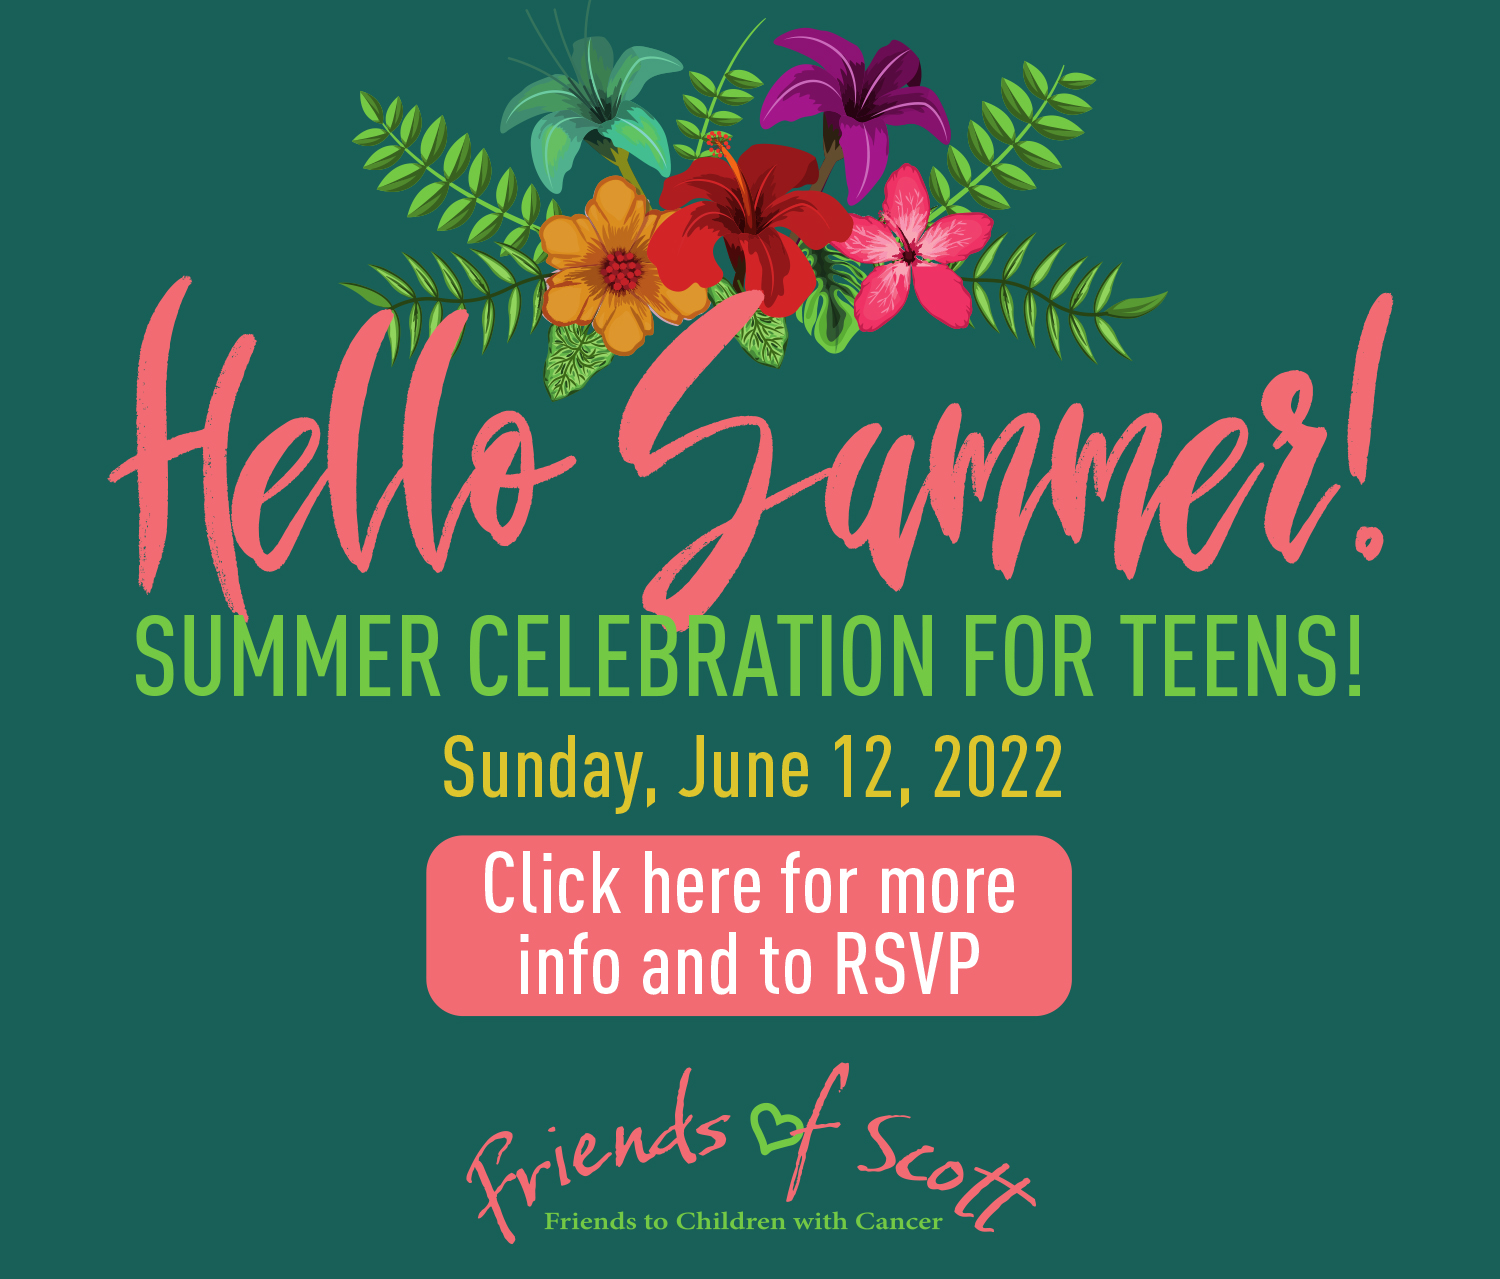 Friends of Scott Summer Celebration Sunday, June 12, 2022 More Information and RSVP